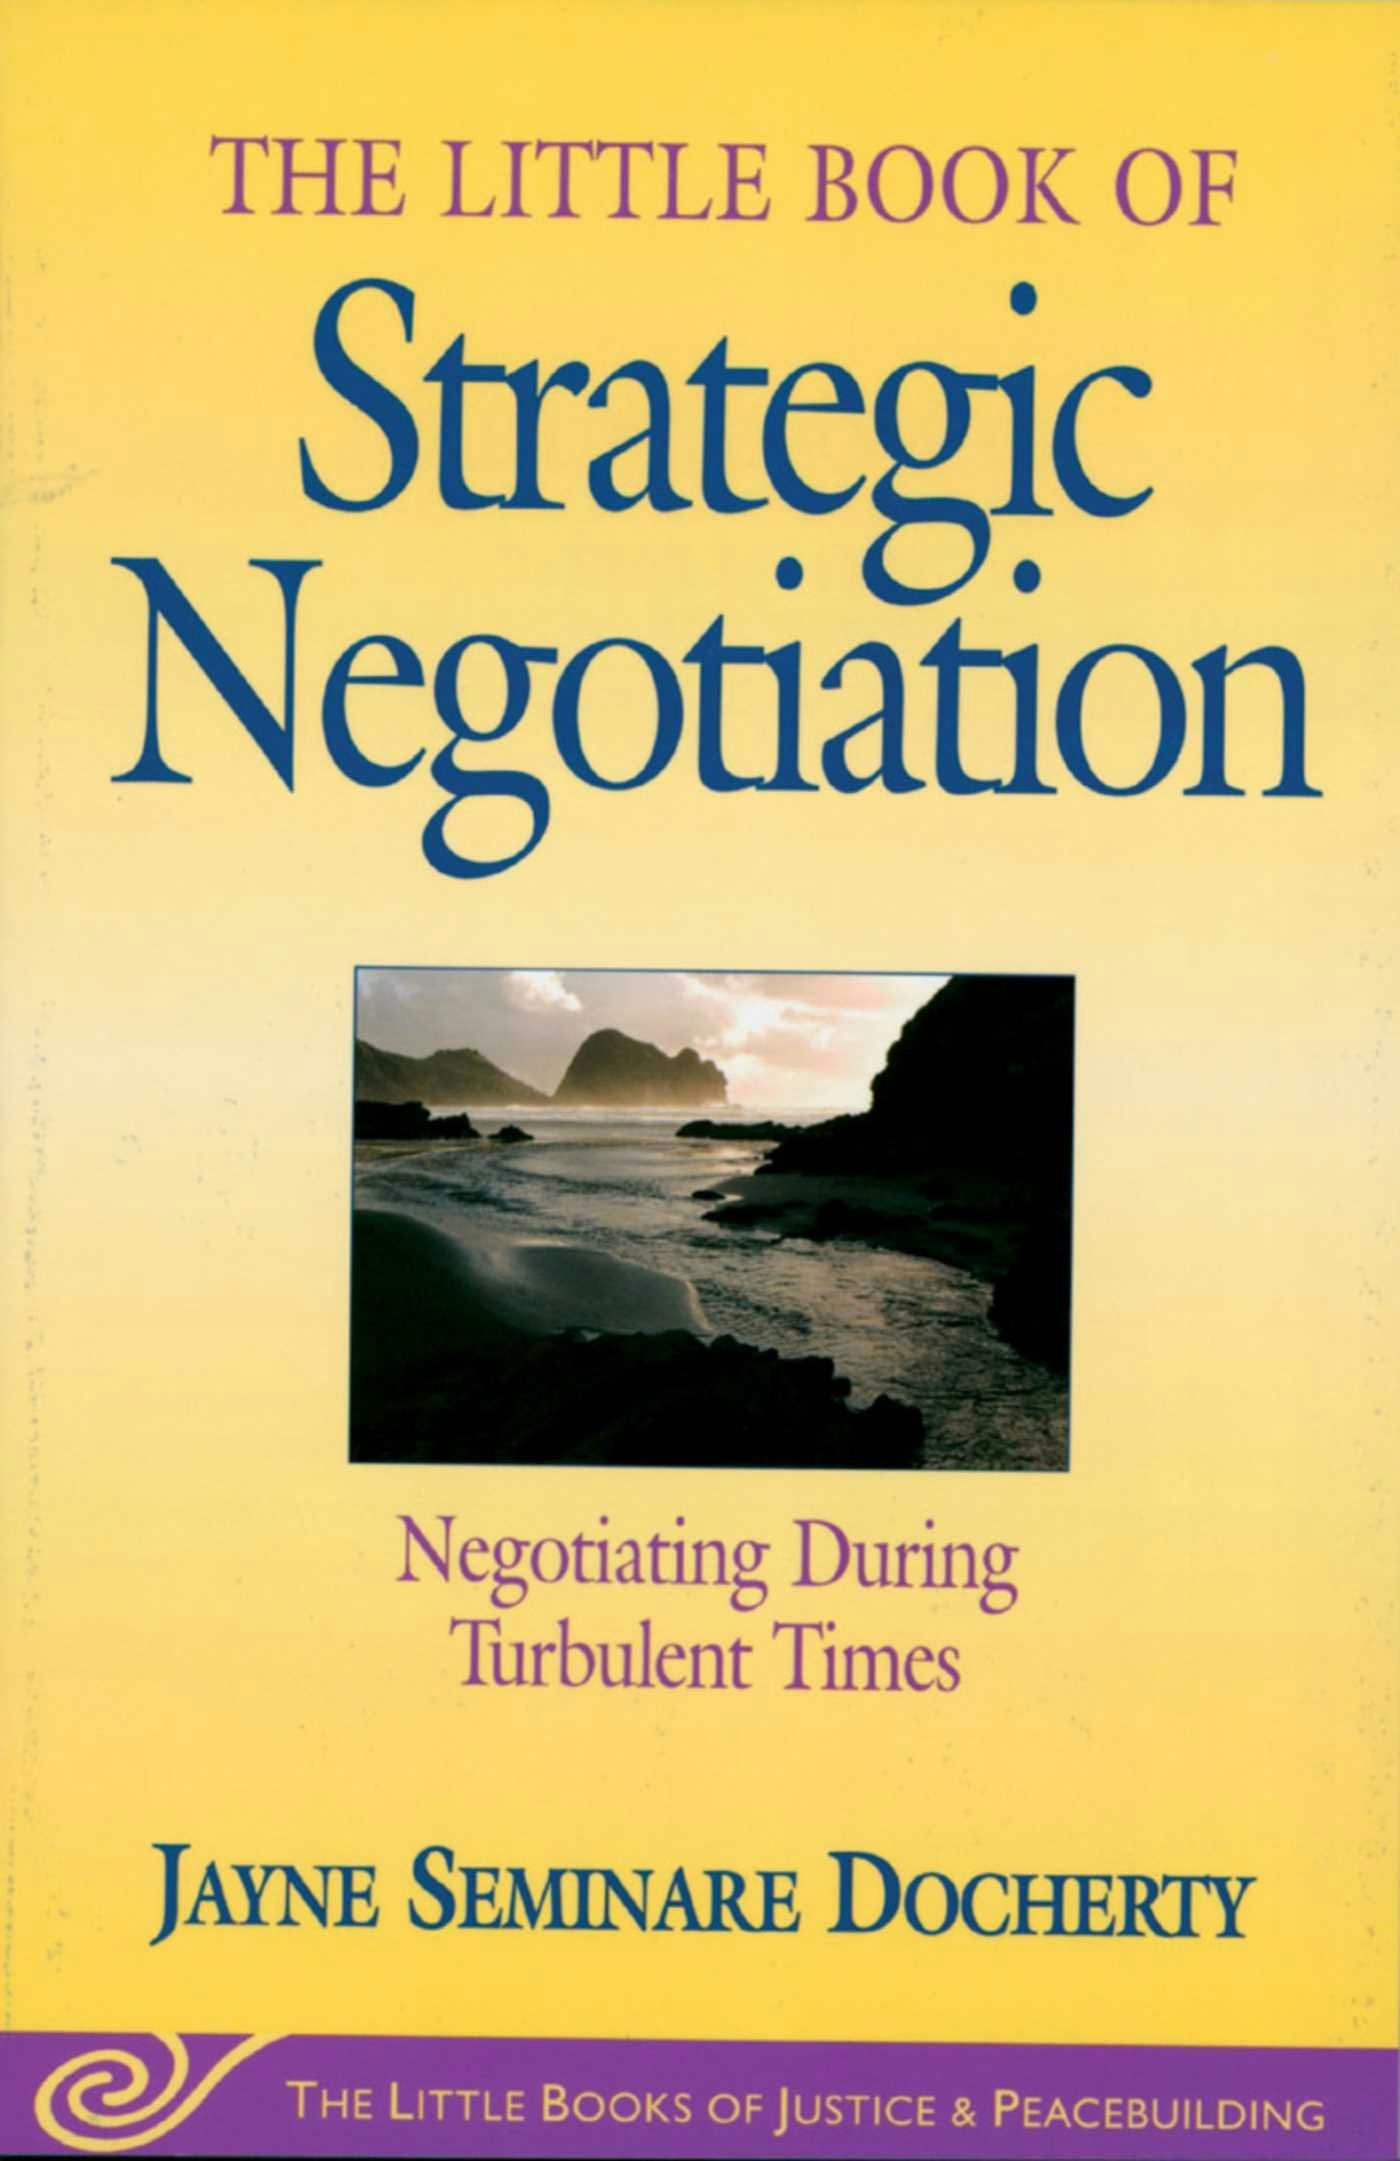 Little Book of Strategic Negotiation: Negotiating During Turbulent Times - Jayne Seminare Docherty